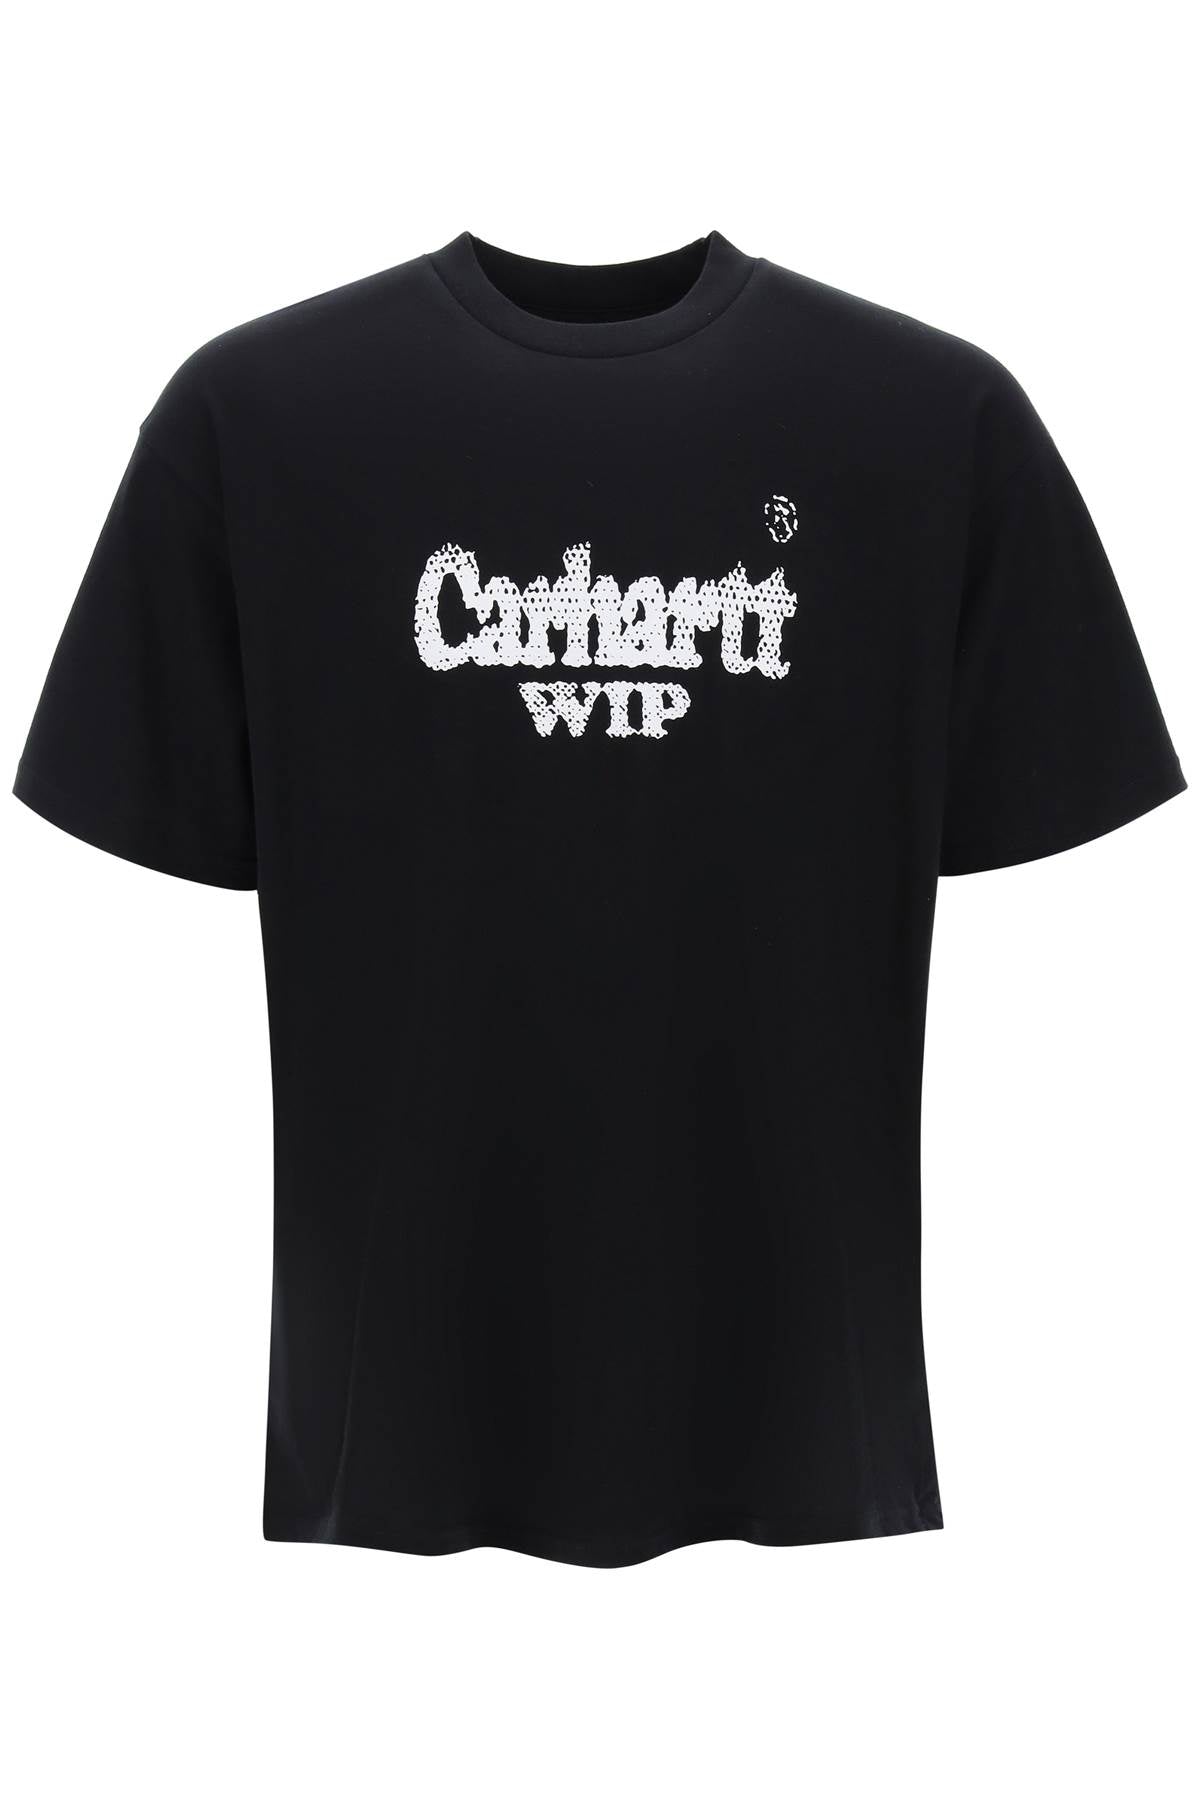 Carhartt wip spree halftone printed t-shirt-0